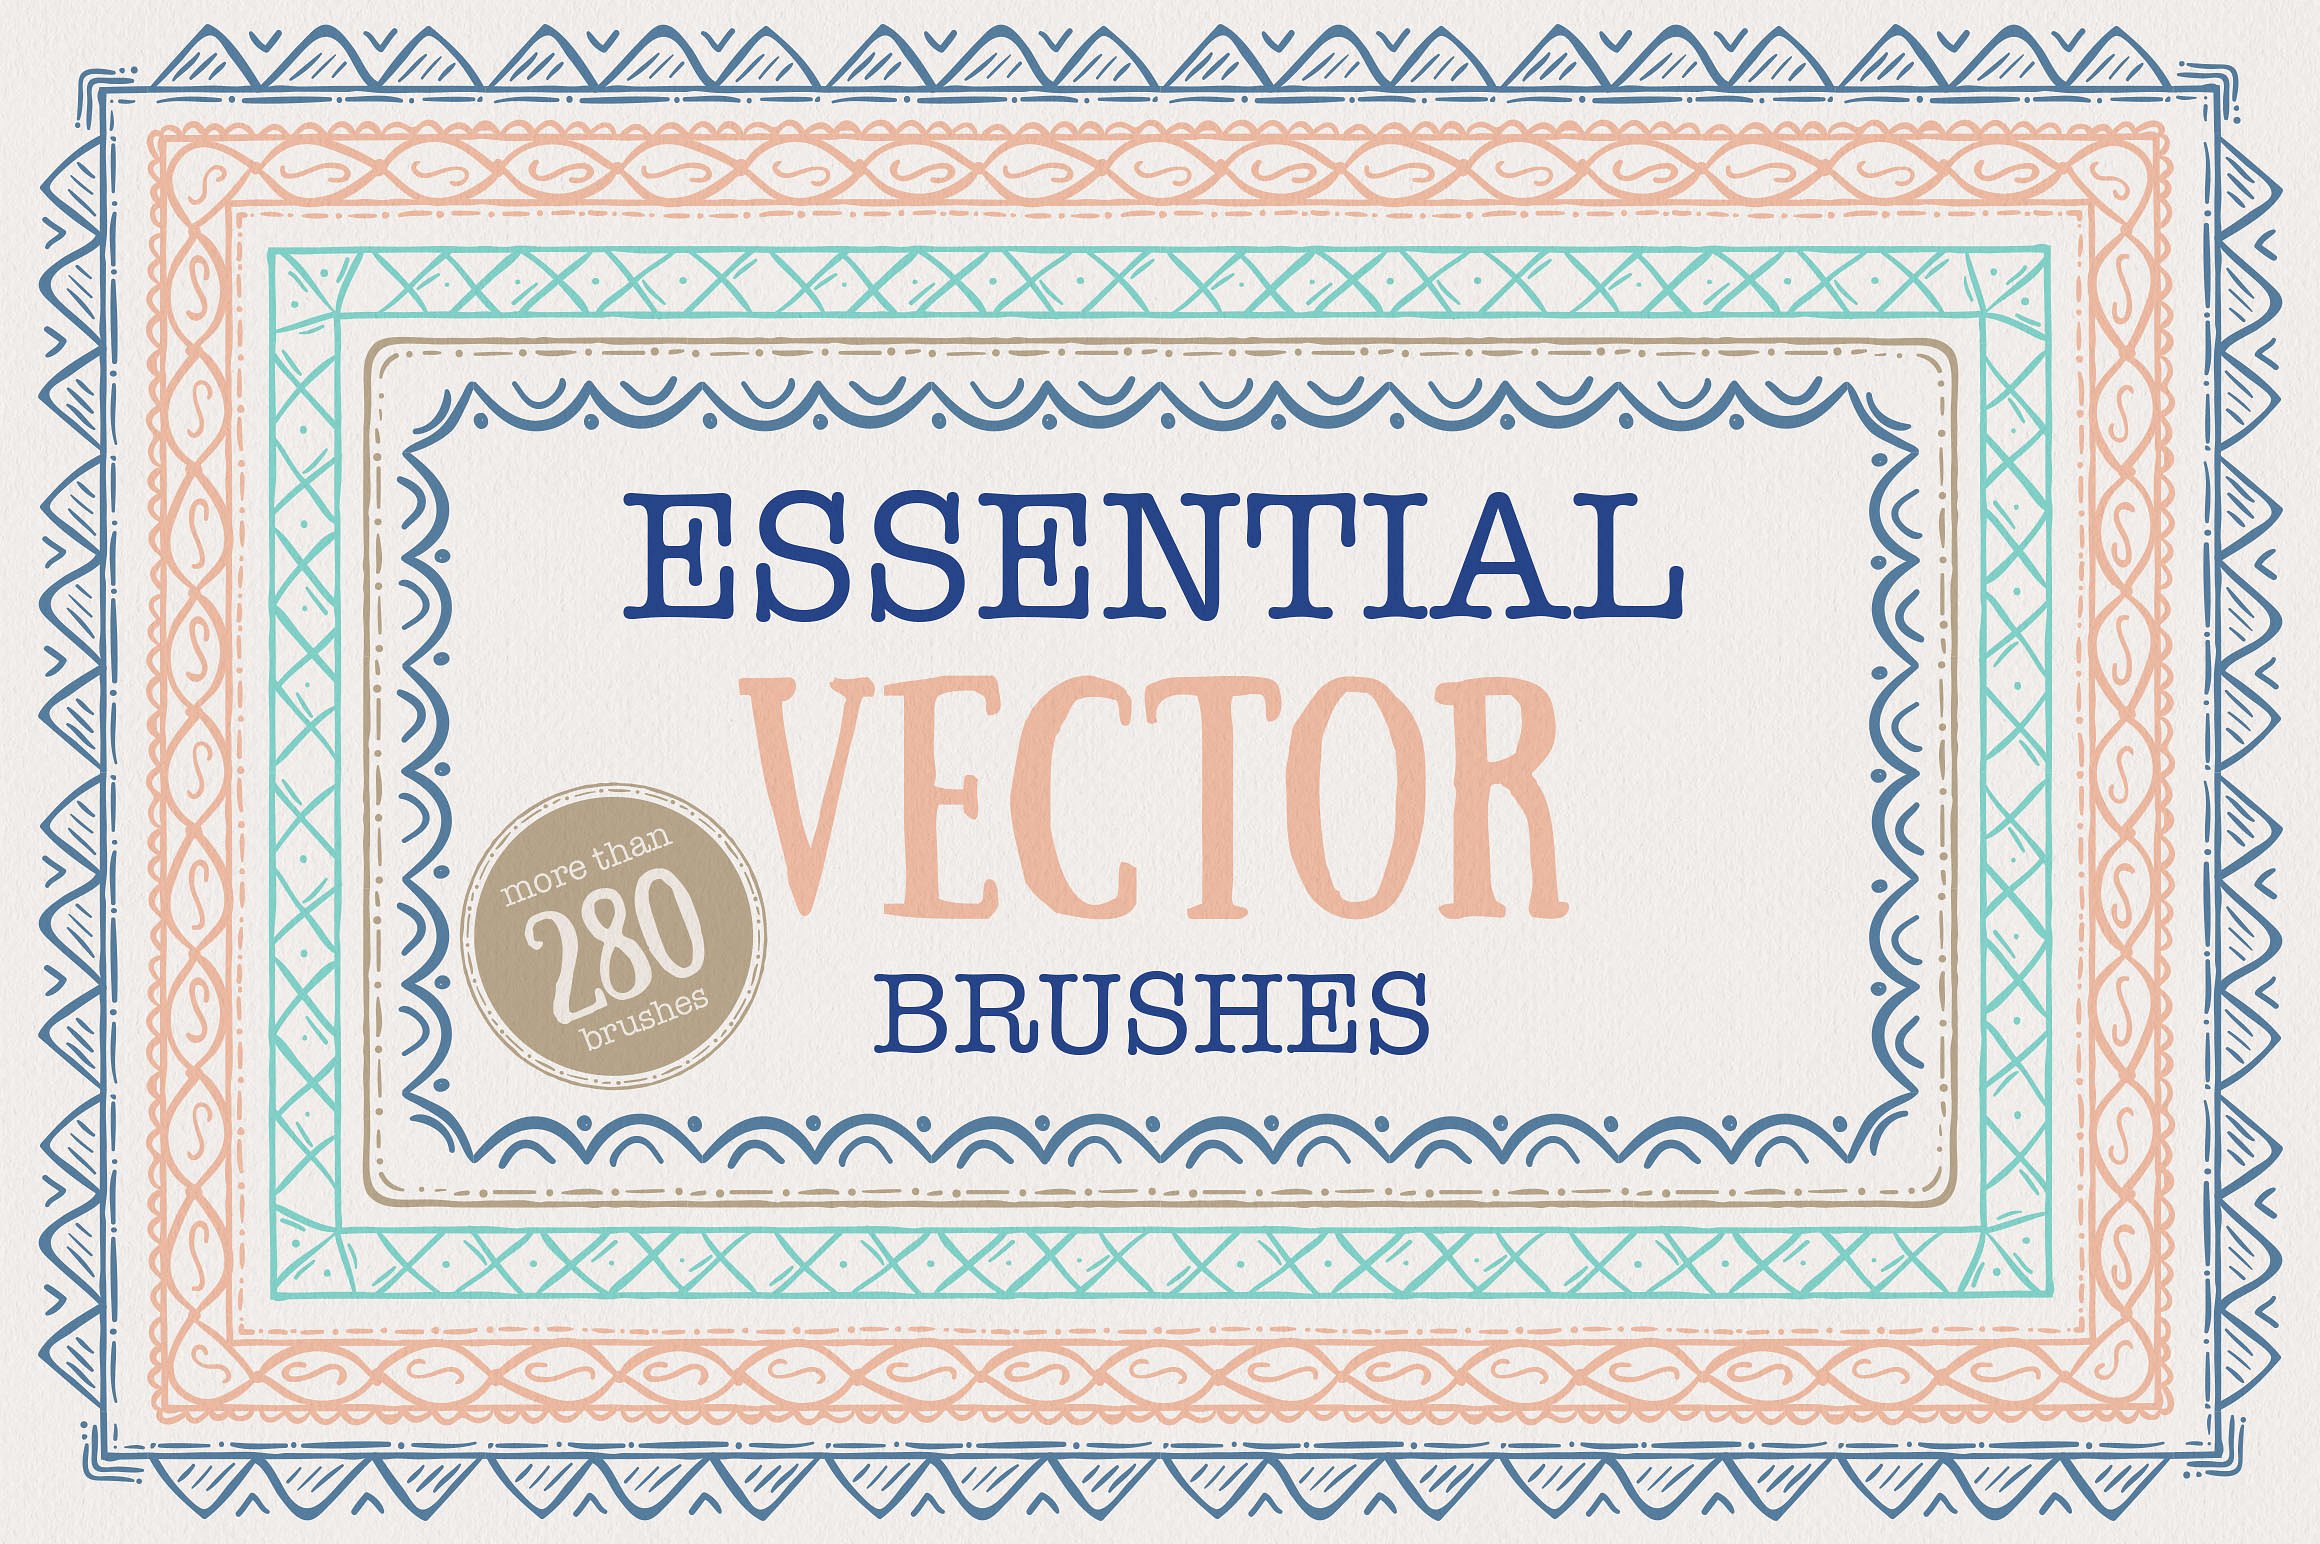 矢量装饰图案画笔 Essential Vector Decoration Kit插图1